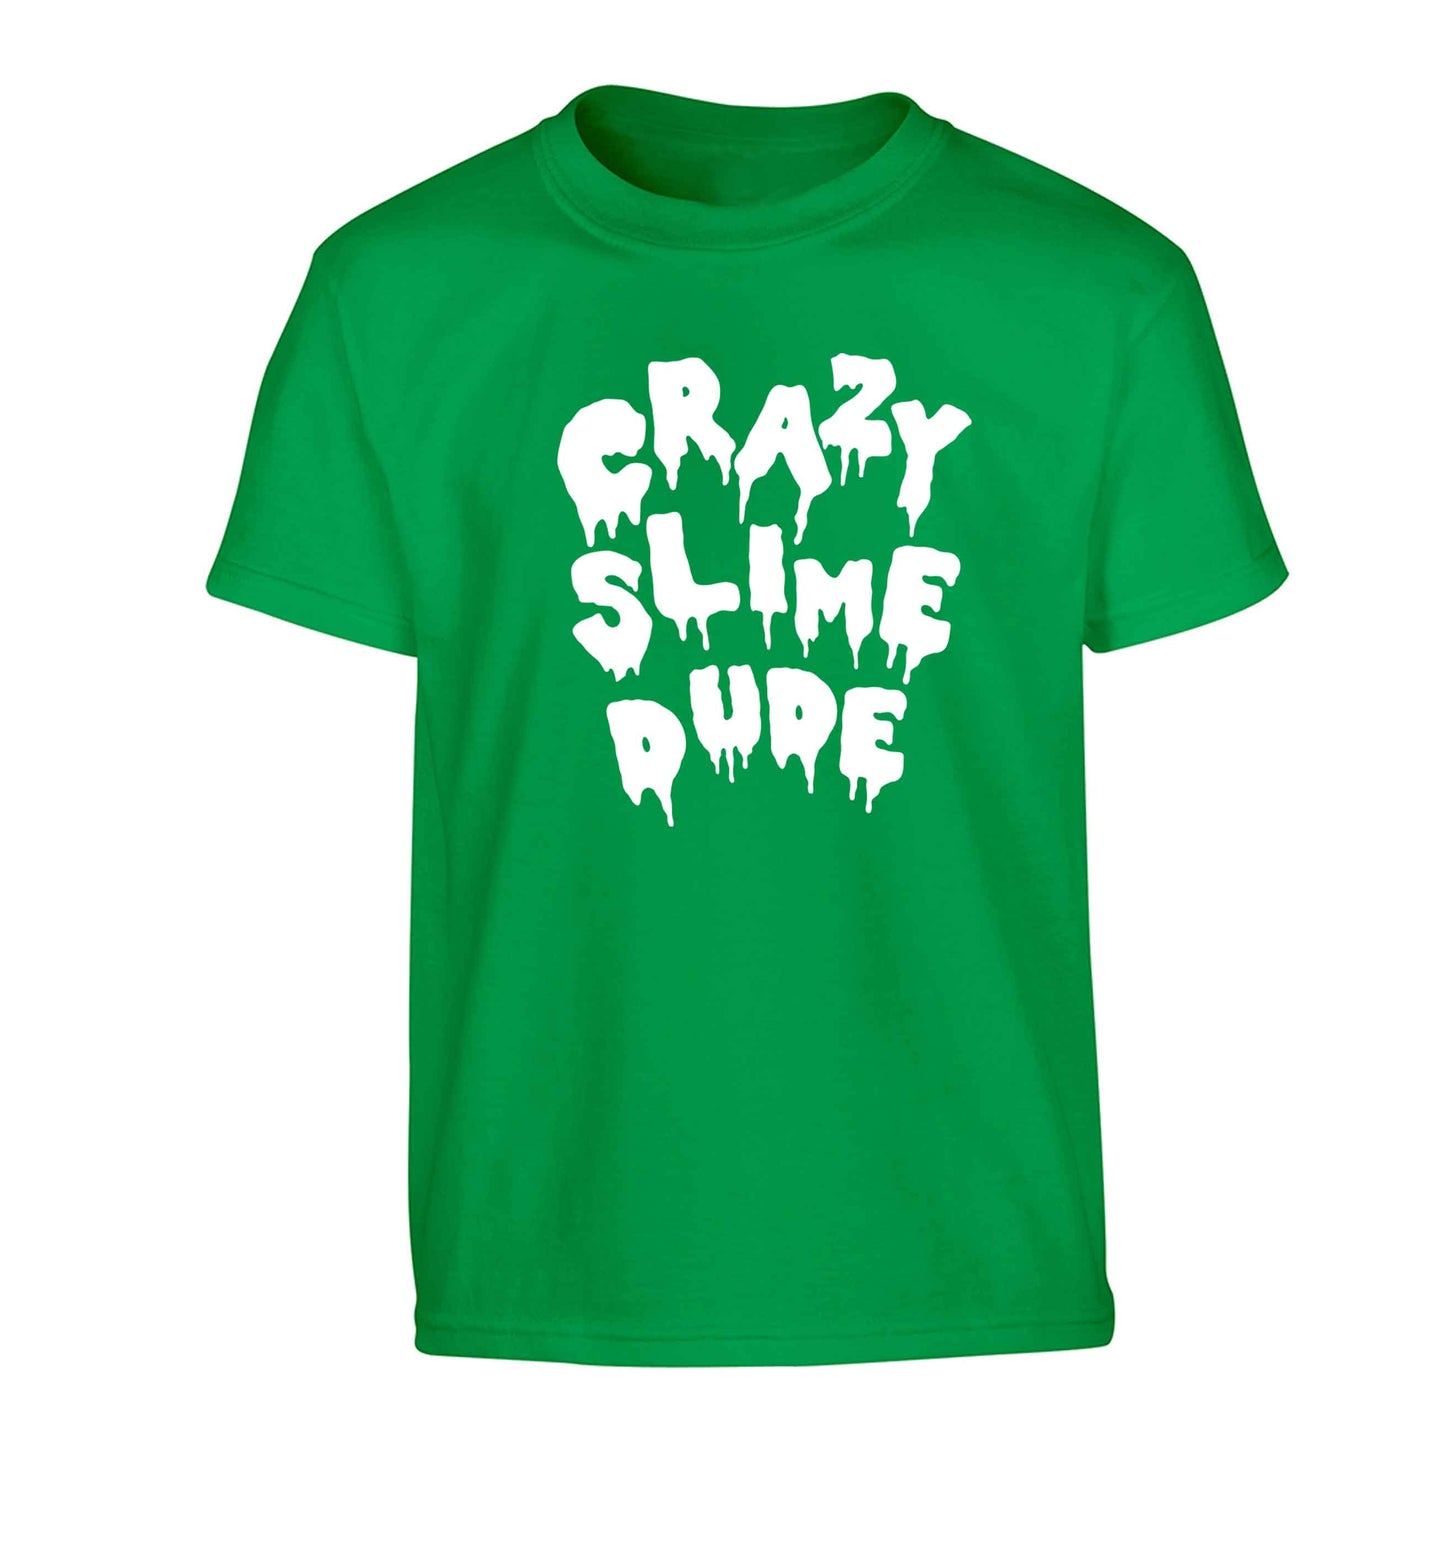 Crazy slime dude Children's green Tshirt 12-13 Years